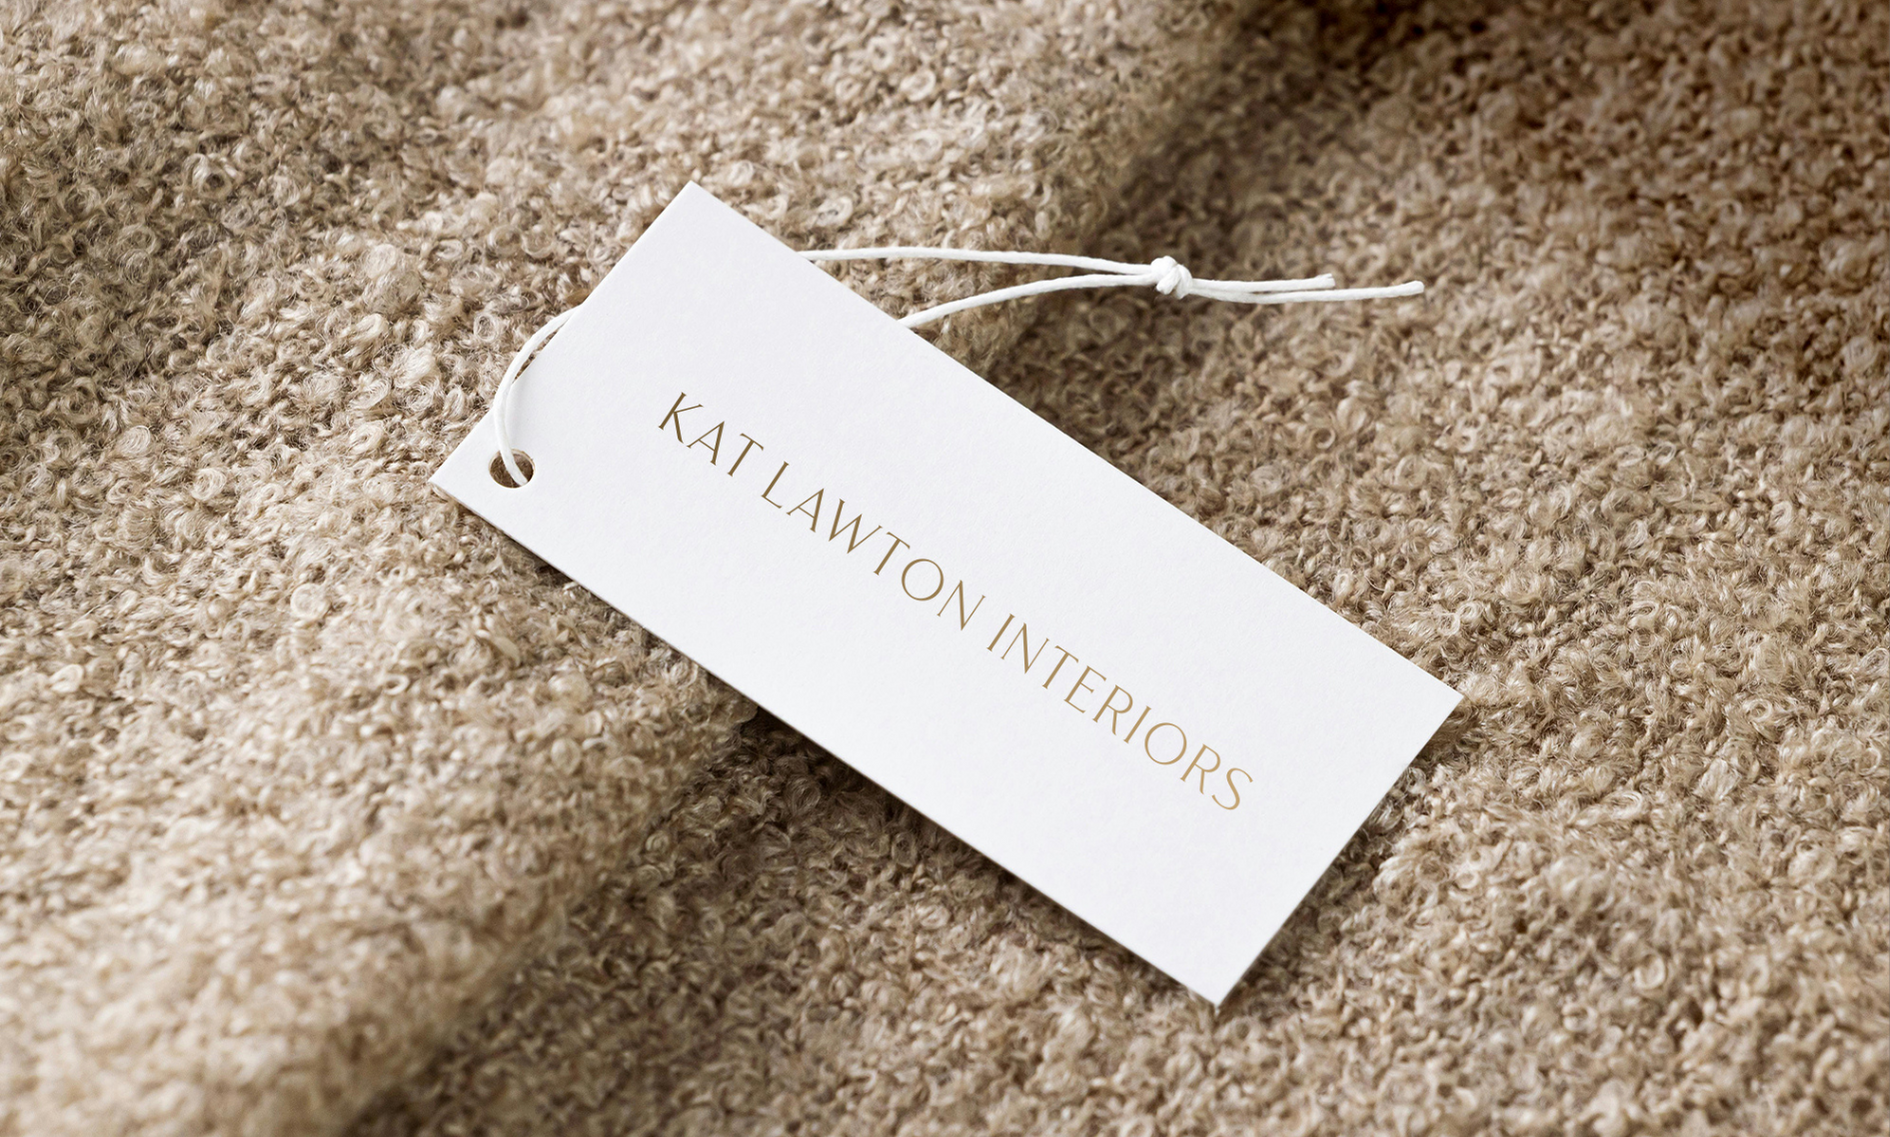 Kat Lawton - Timeless Classic Interior Designer Brand - Branding by Sarah Ann Design